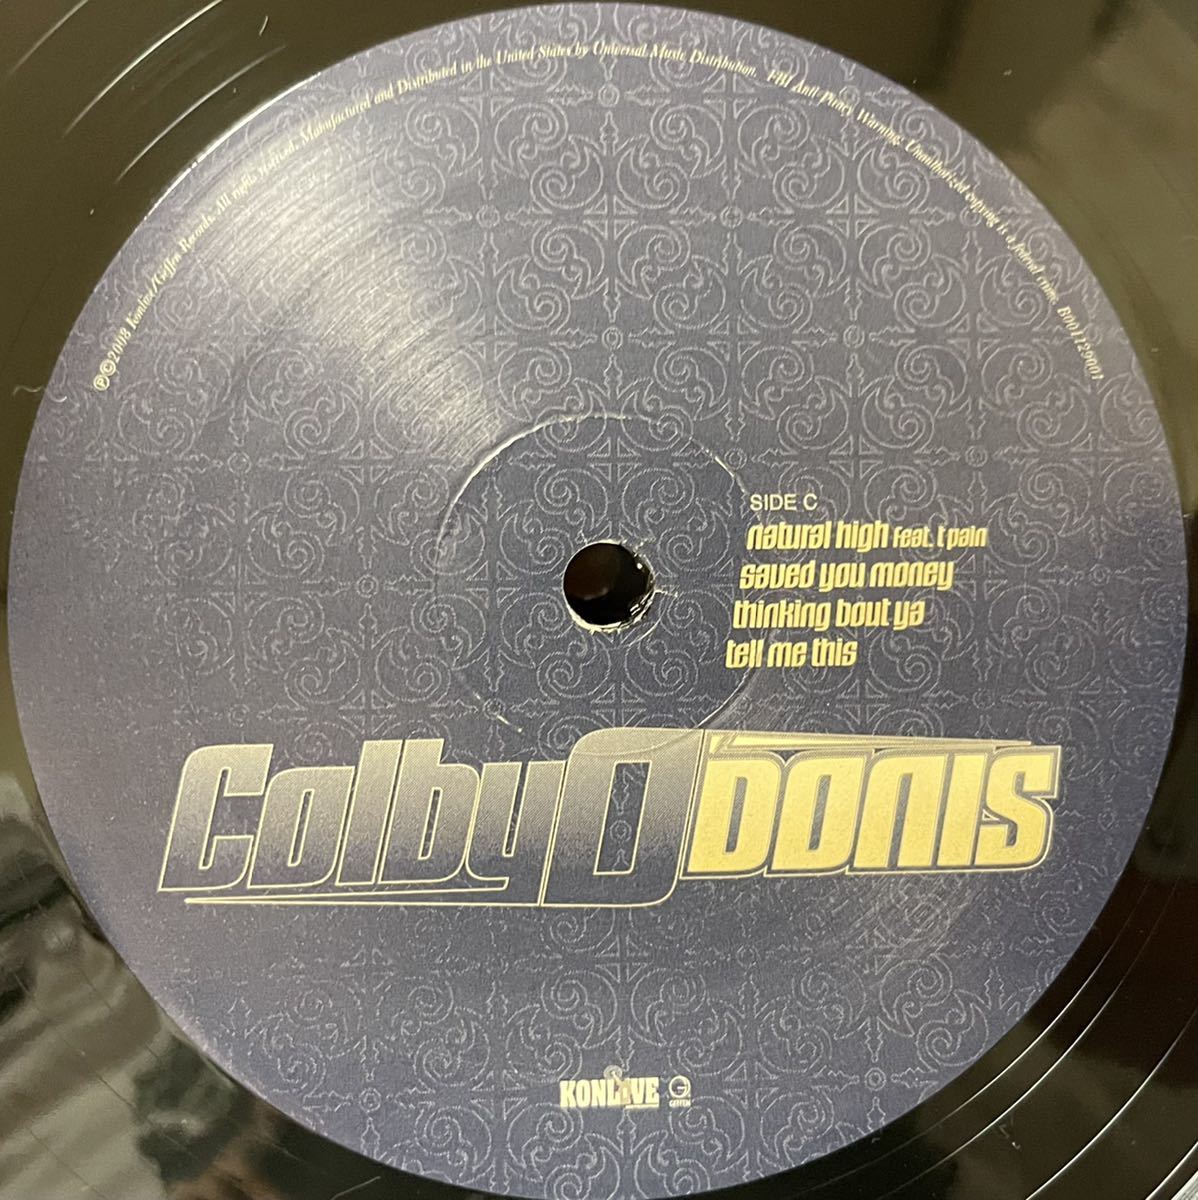 Colby O'donis 人気曲WHAT YOU GOT収録のアルバム2枚組 12inchその他にもプロモーション盤 レア盤 人気レコード 多数出品中_画像7